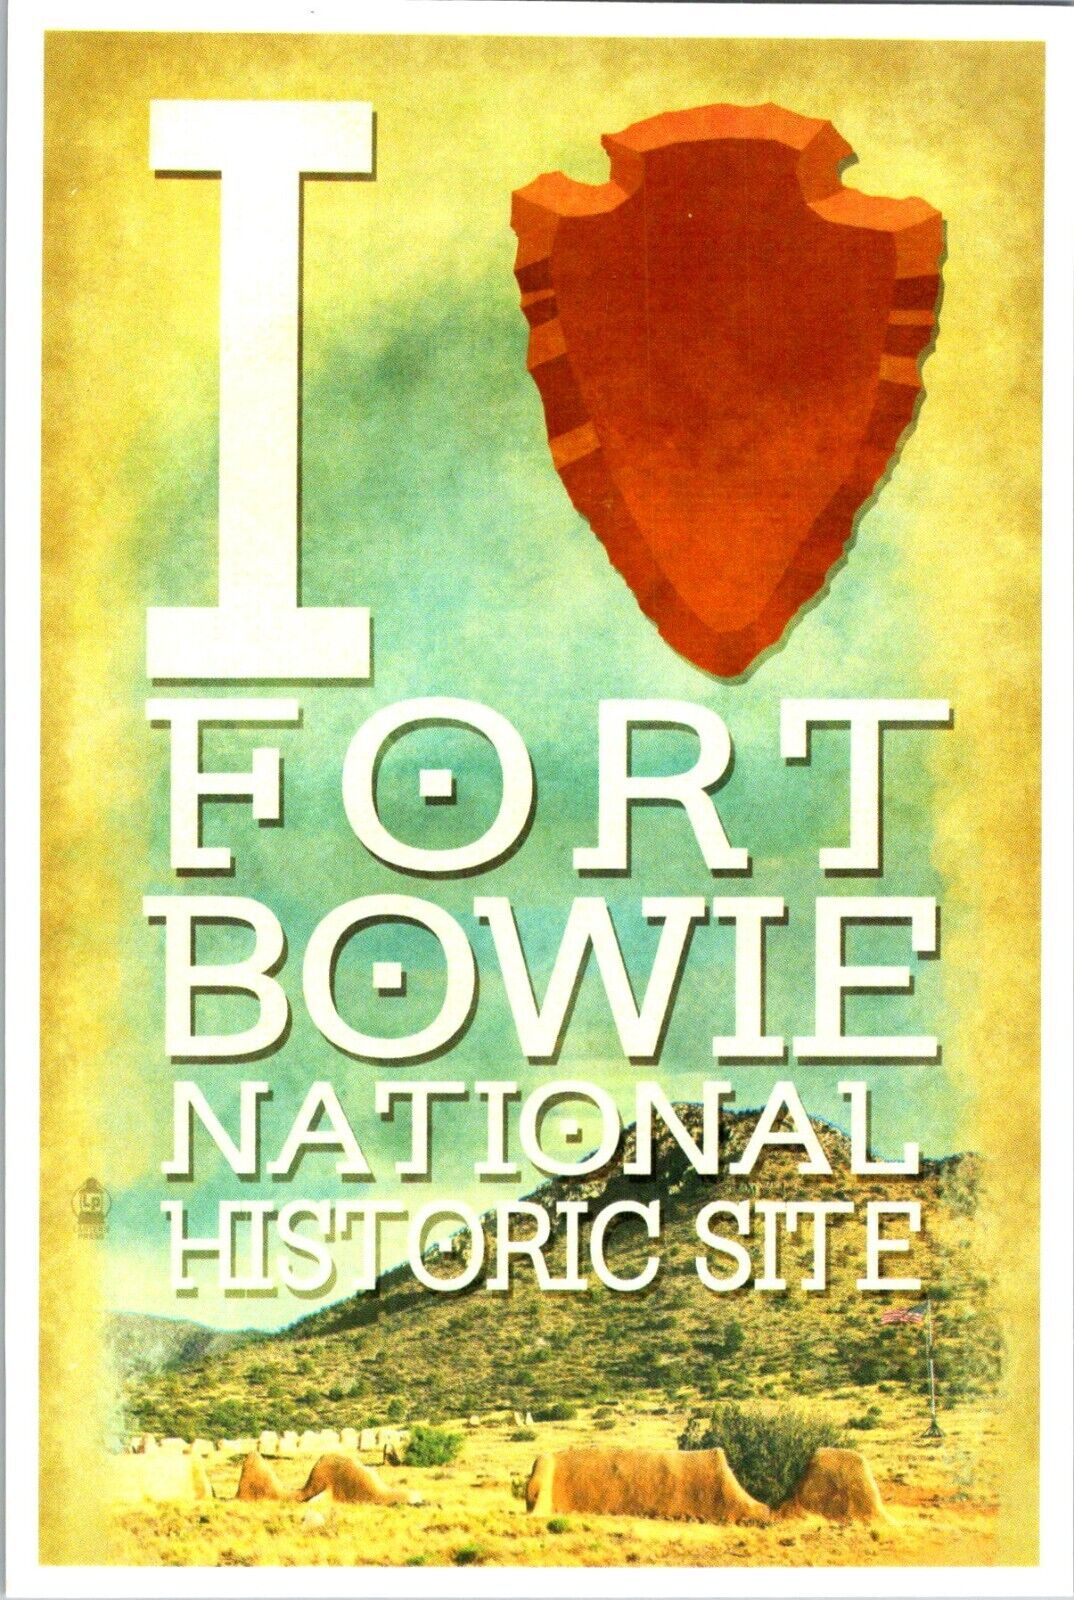 I love Fort Bowie National Historic Site Arizona postcard